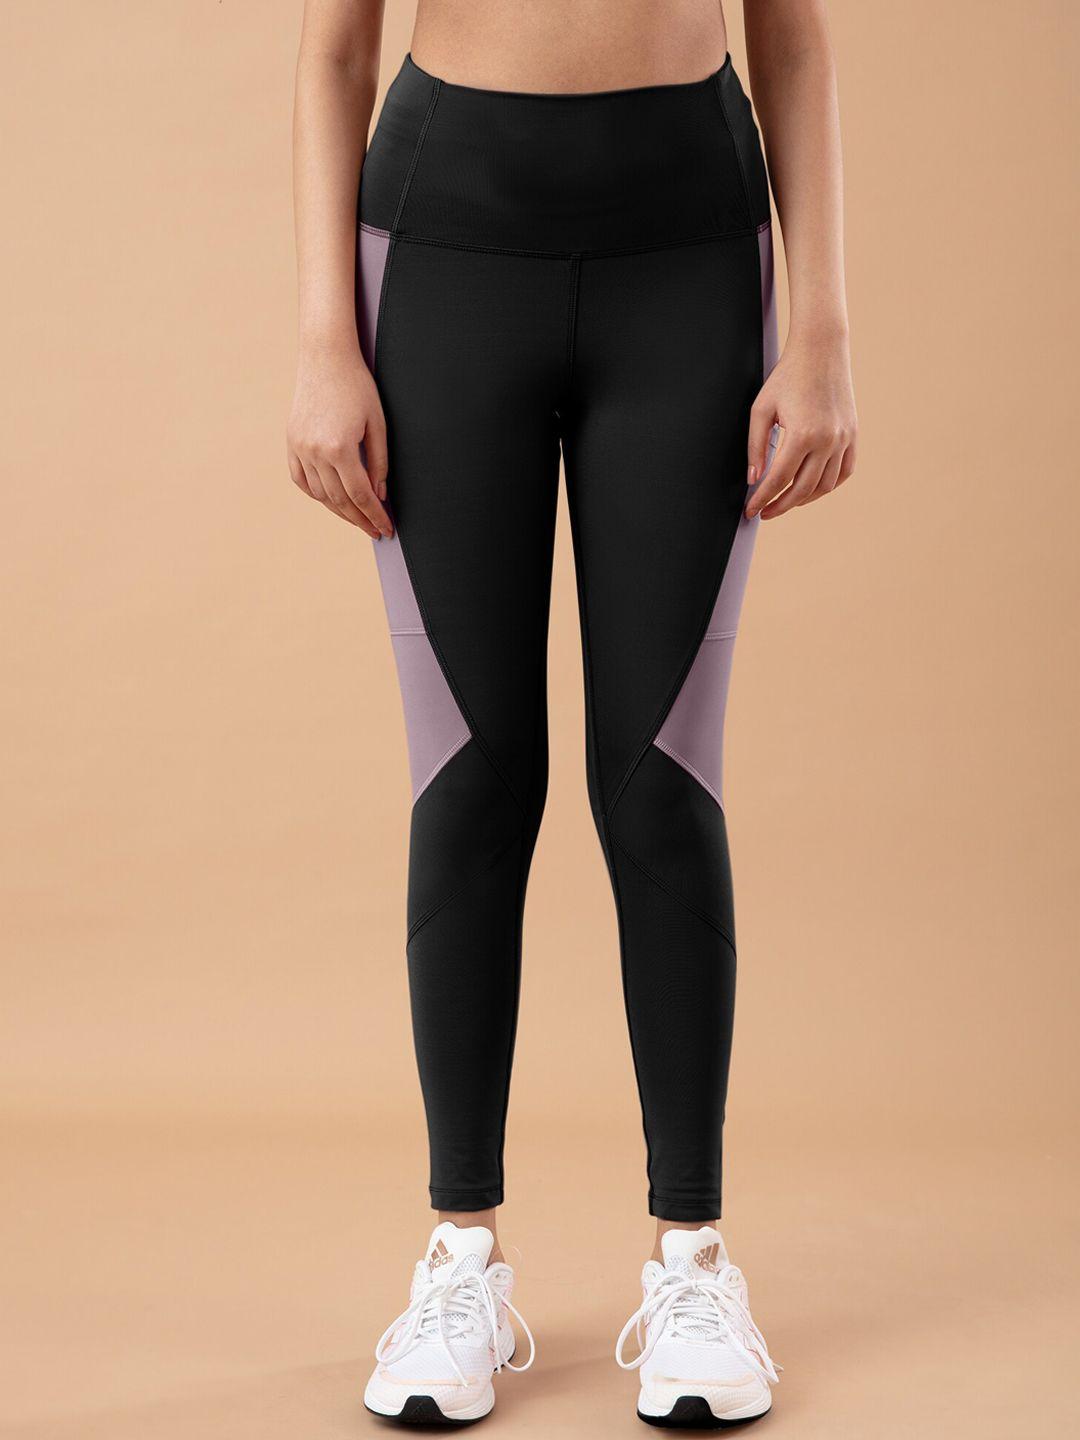 nykd women black & violet color-blocked gym tights